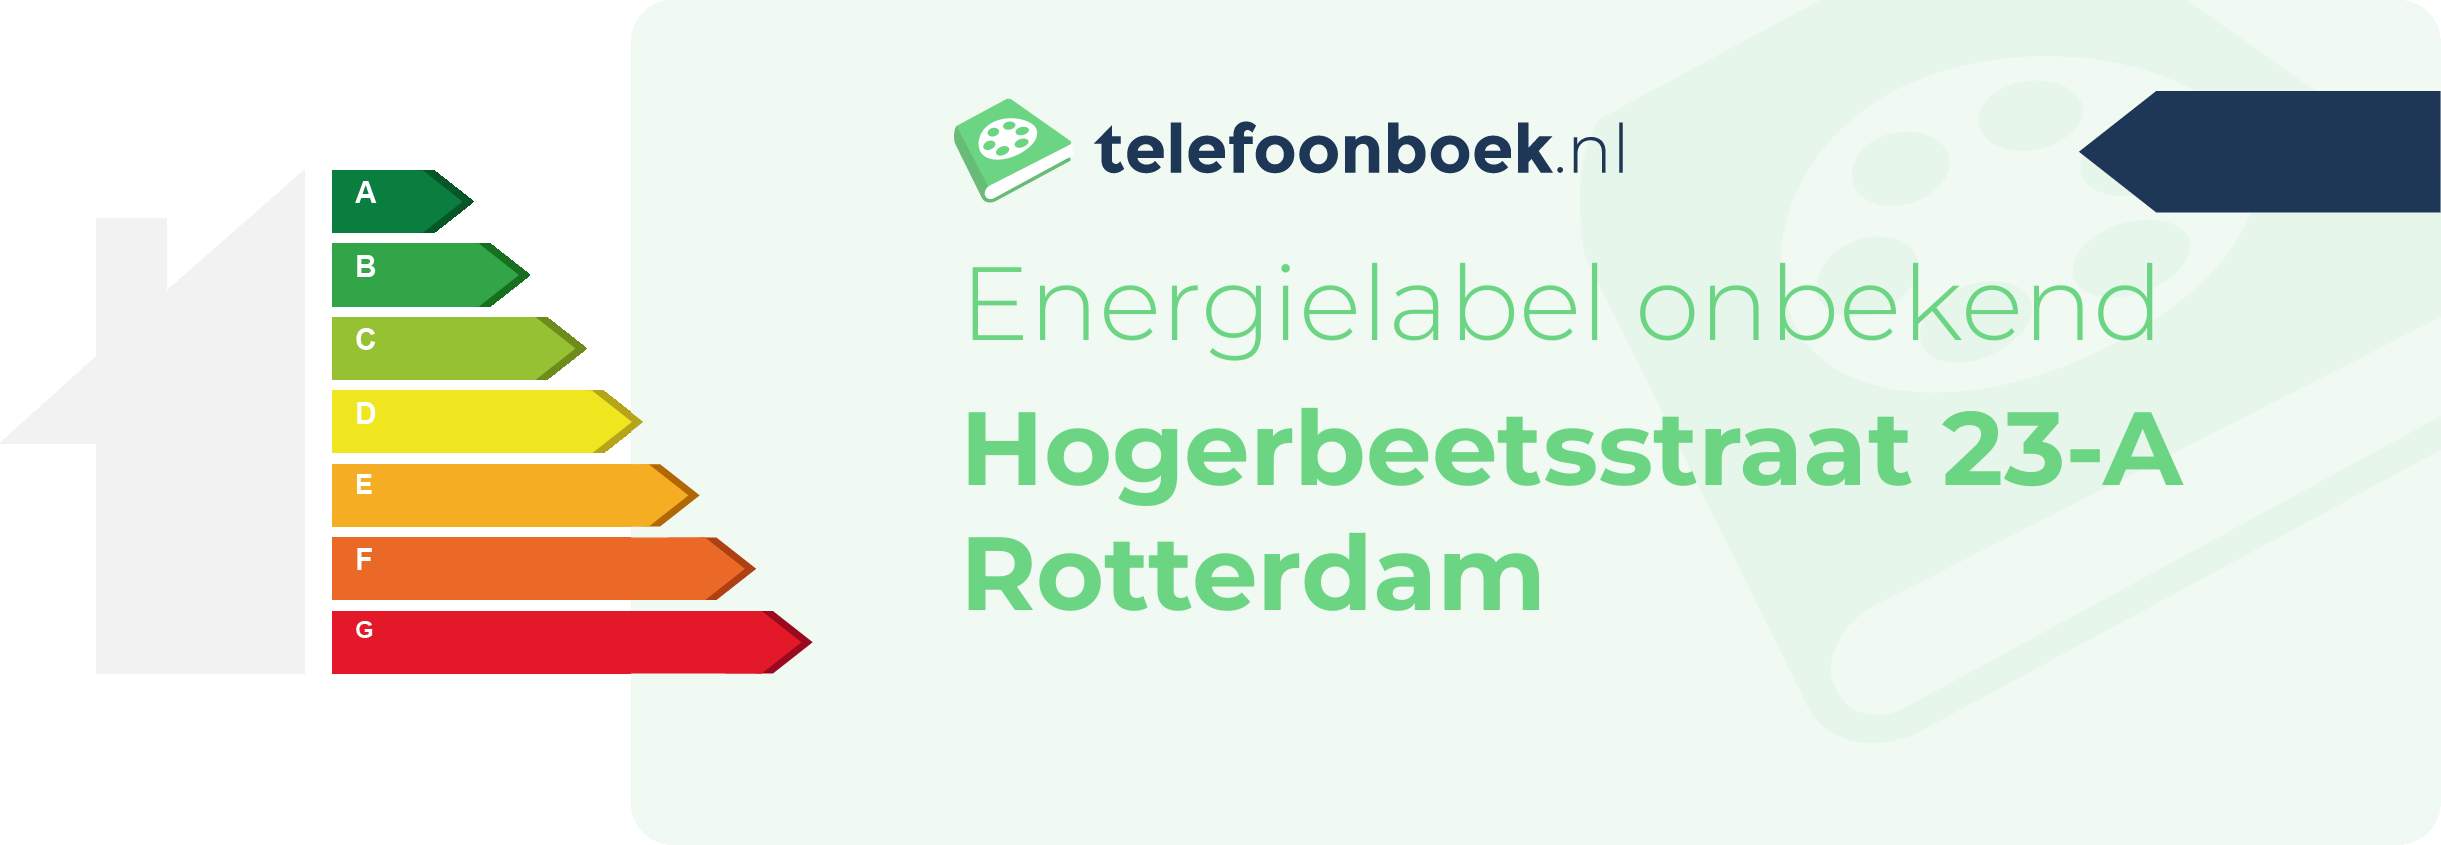 Energielabel Hogerbeetsstraat 23-A Rotterdam